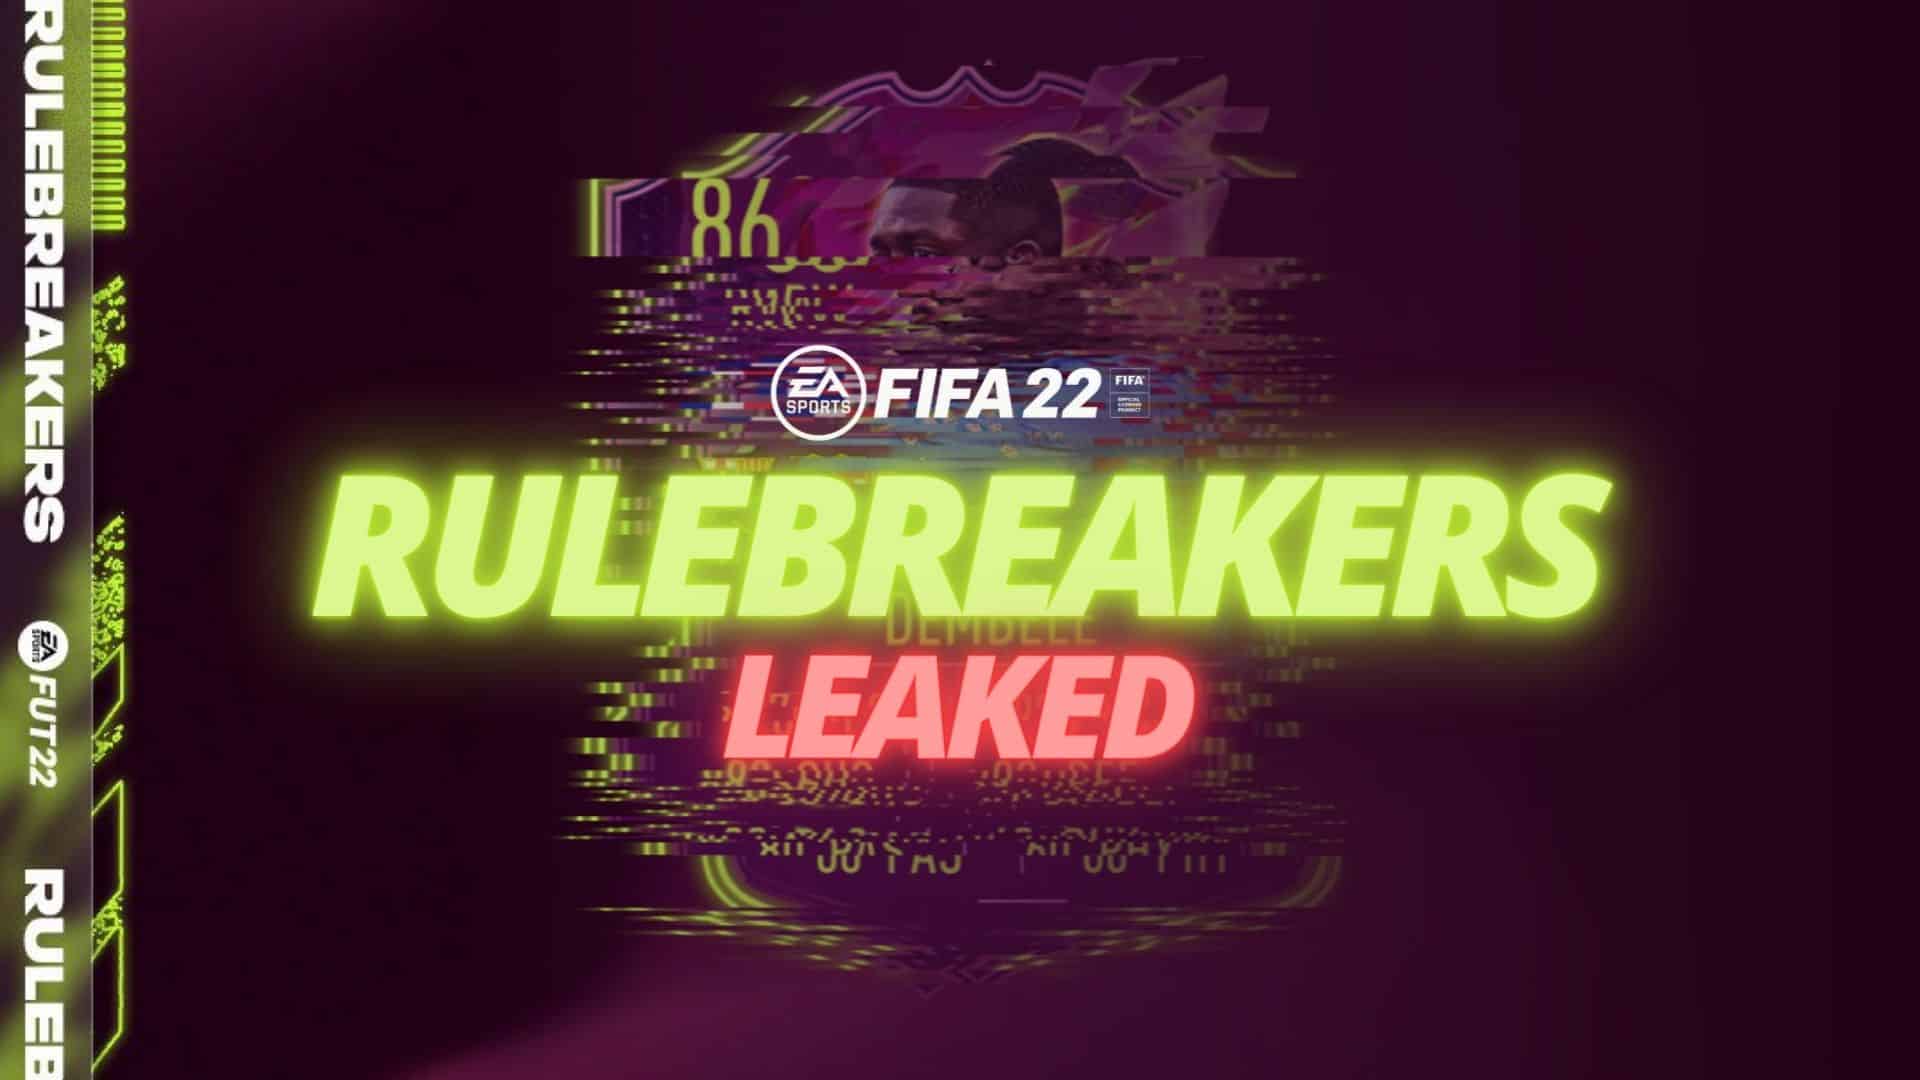 RULEBREAKERS FIFA 22